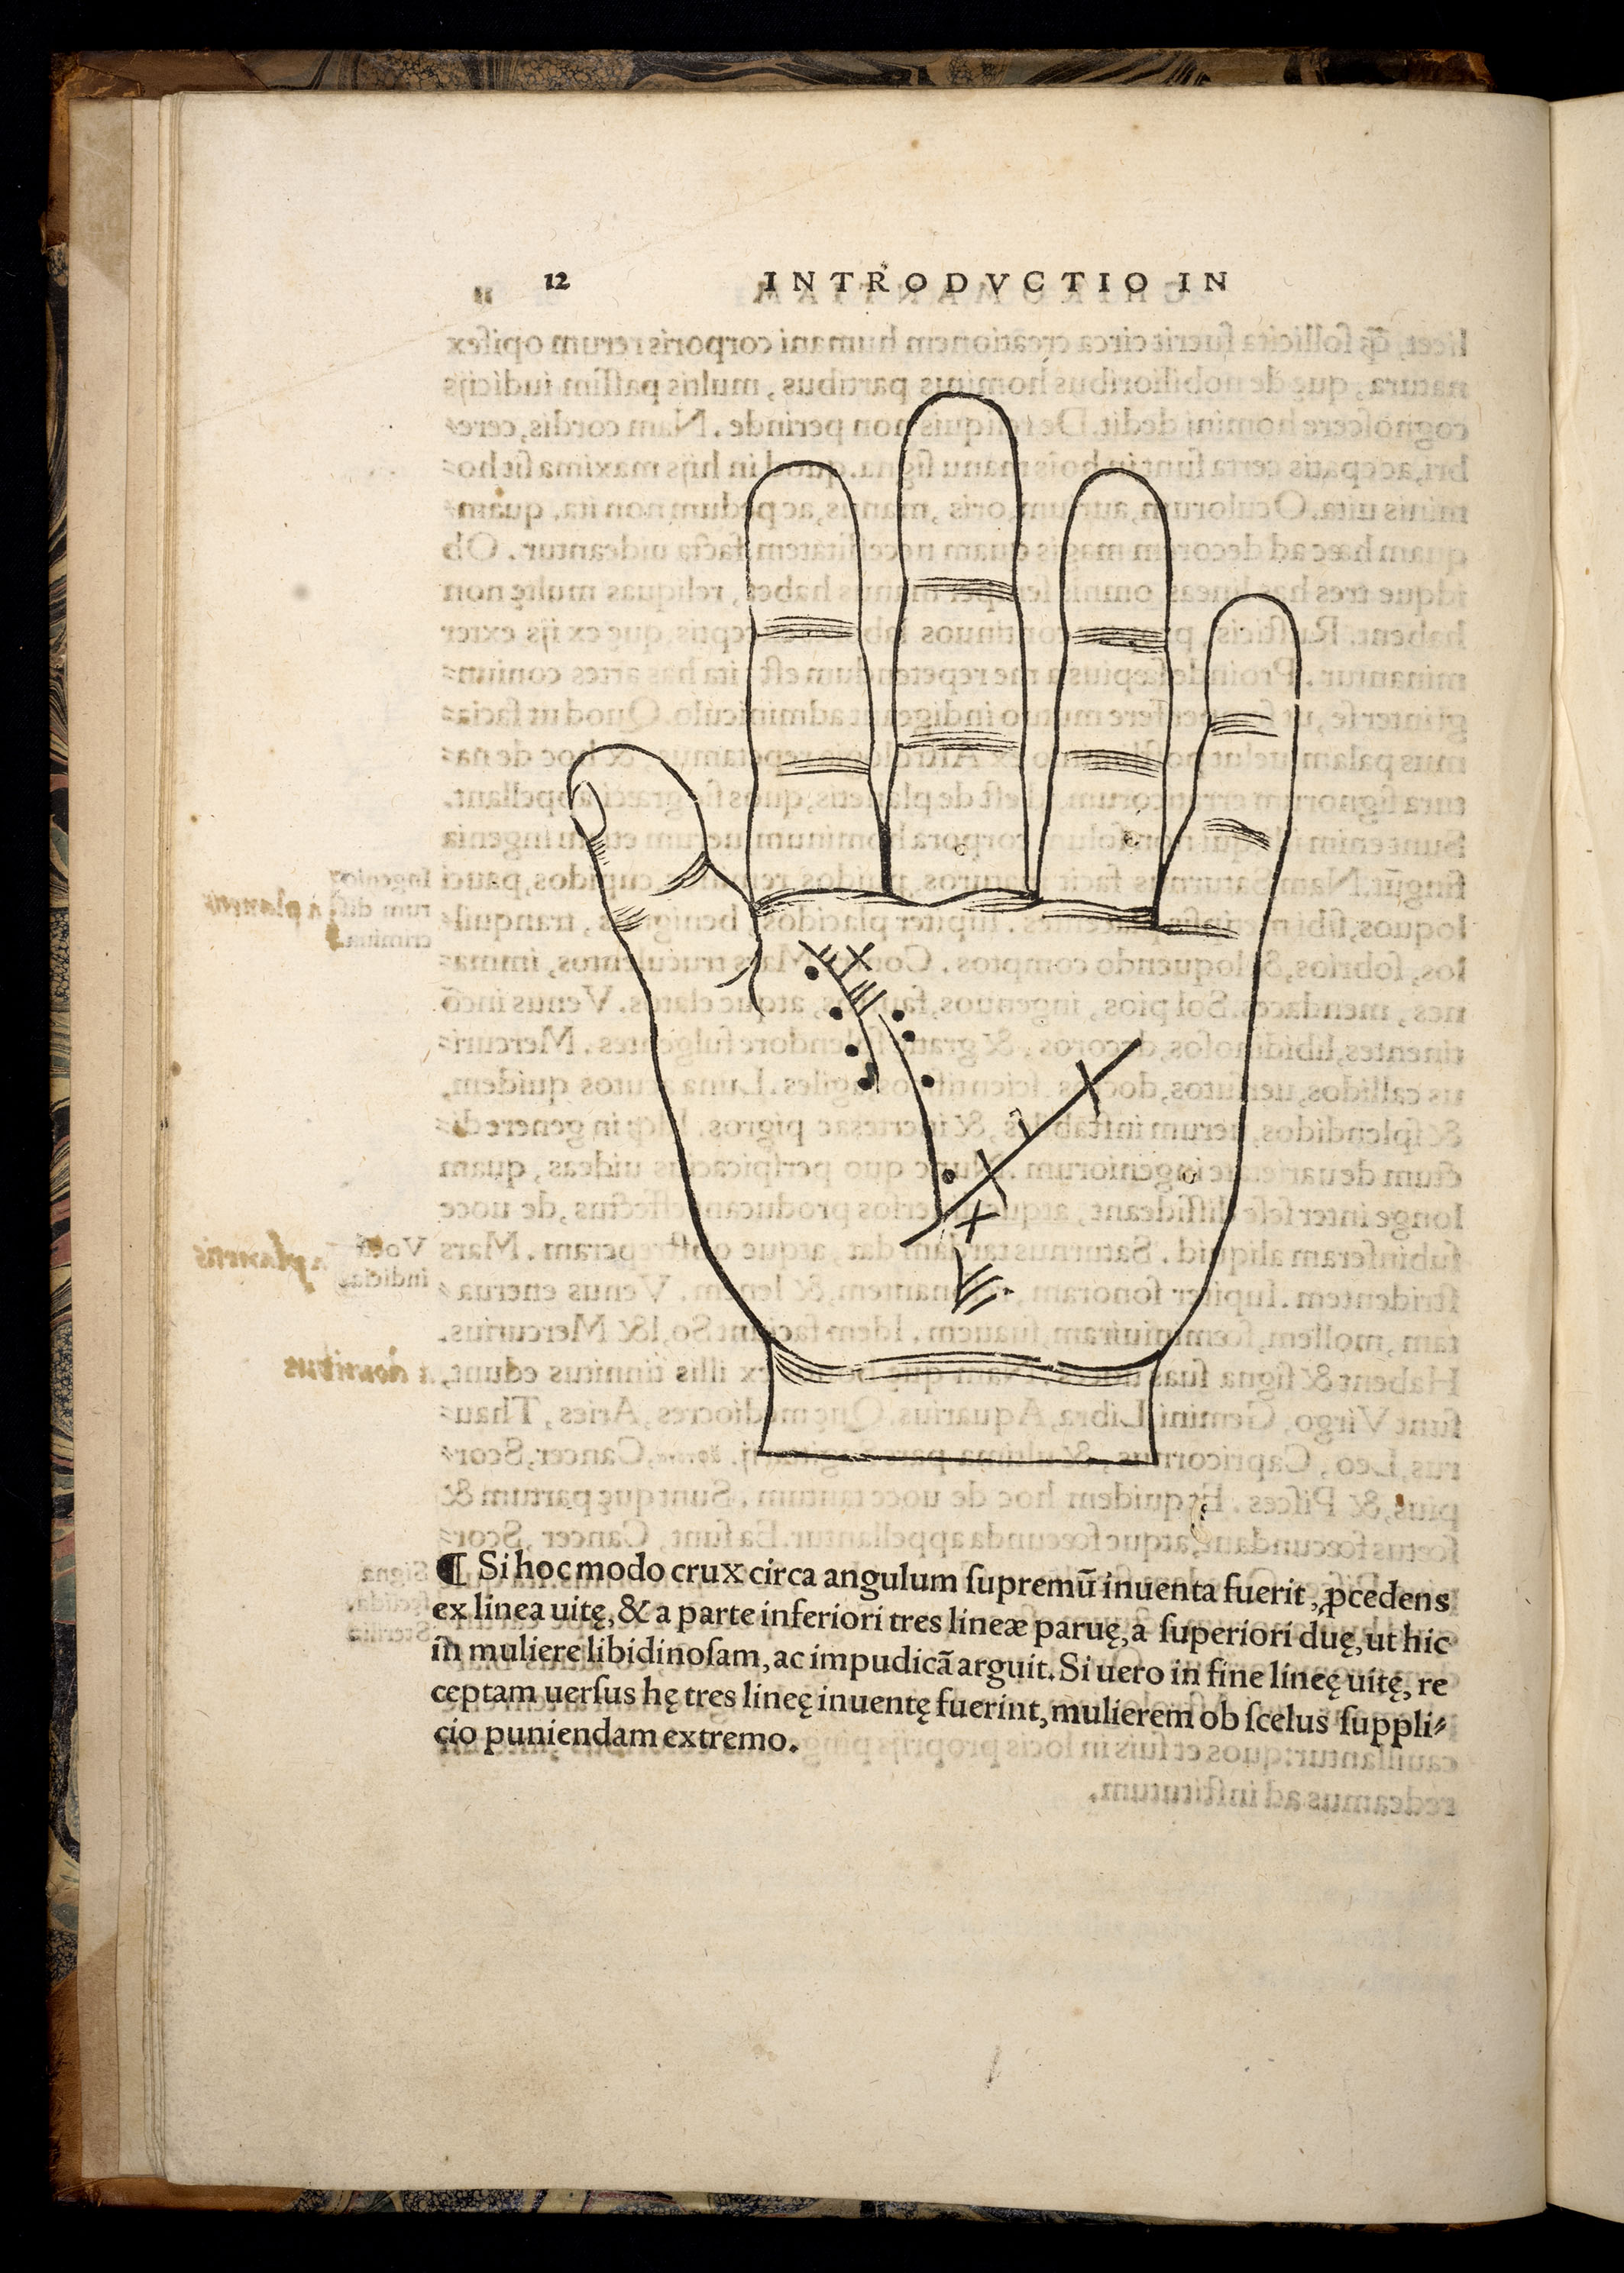 BT3.250.13, p.12, Johannes Indagine鈥檚 Chiromantia (1531)